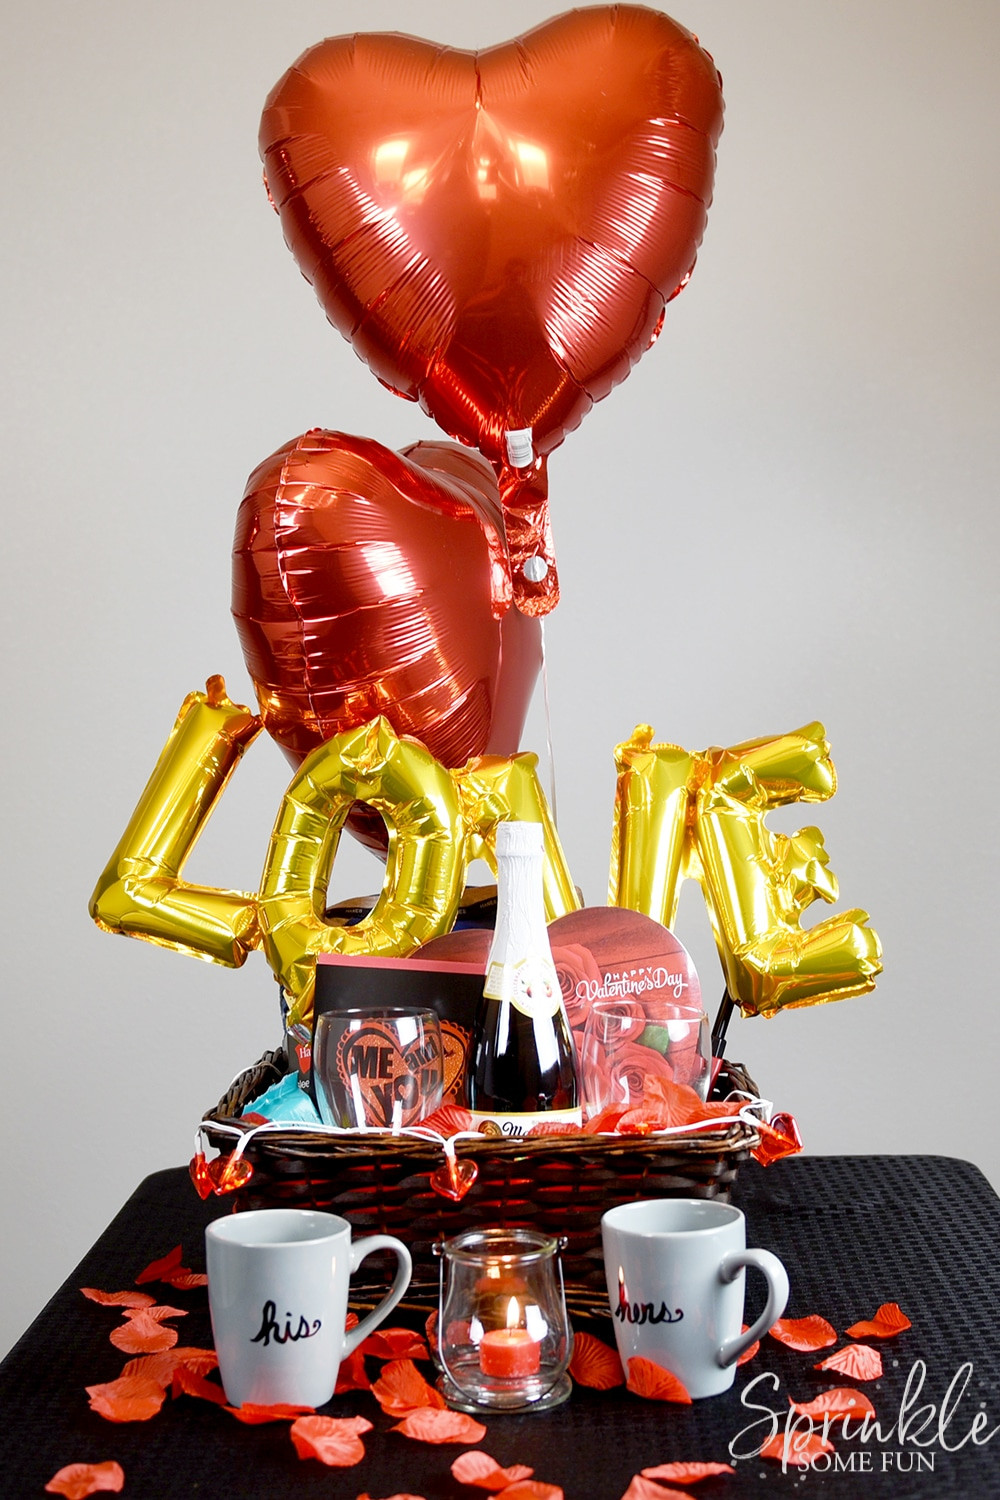 Unconventional Valentines Gift Ideas
 Romantic Valentine Gift Basket Ideas ⋆ Sprinkle Some Fun